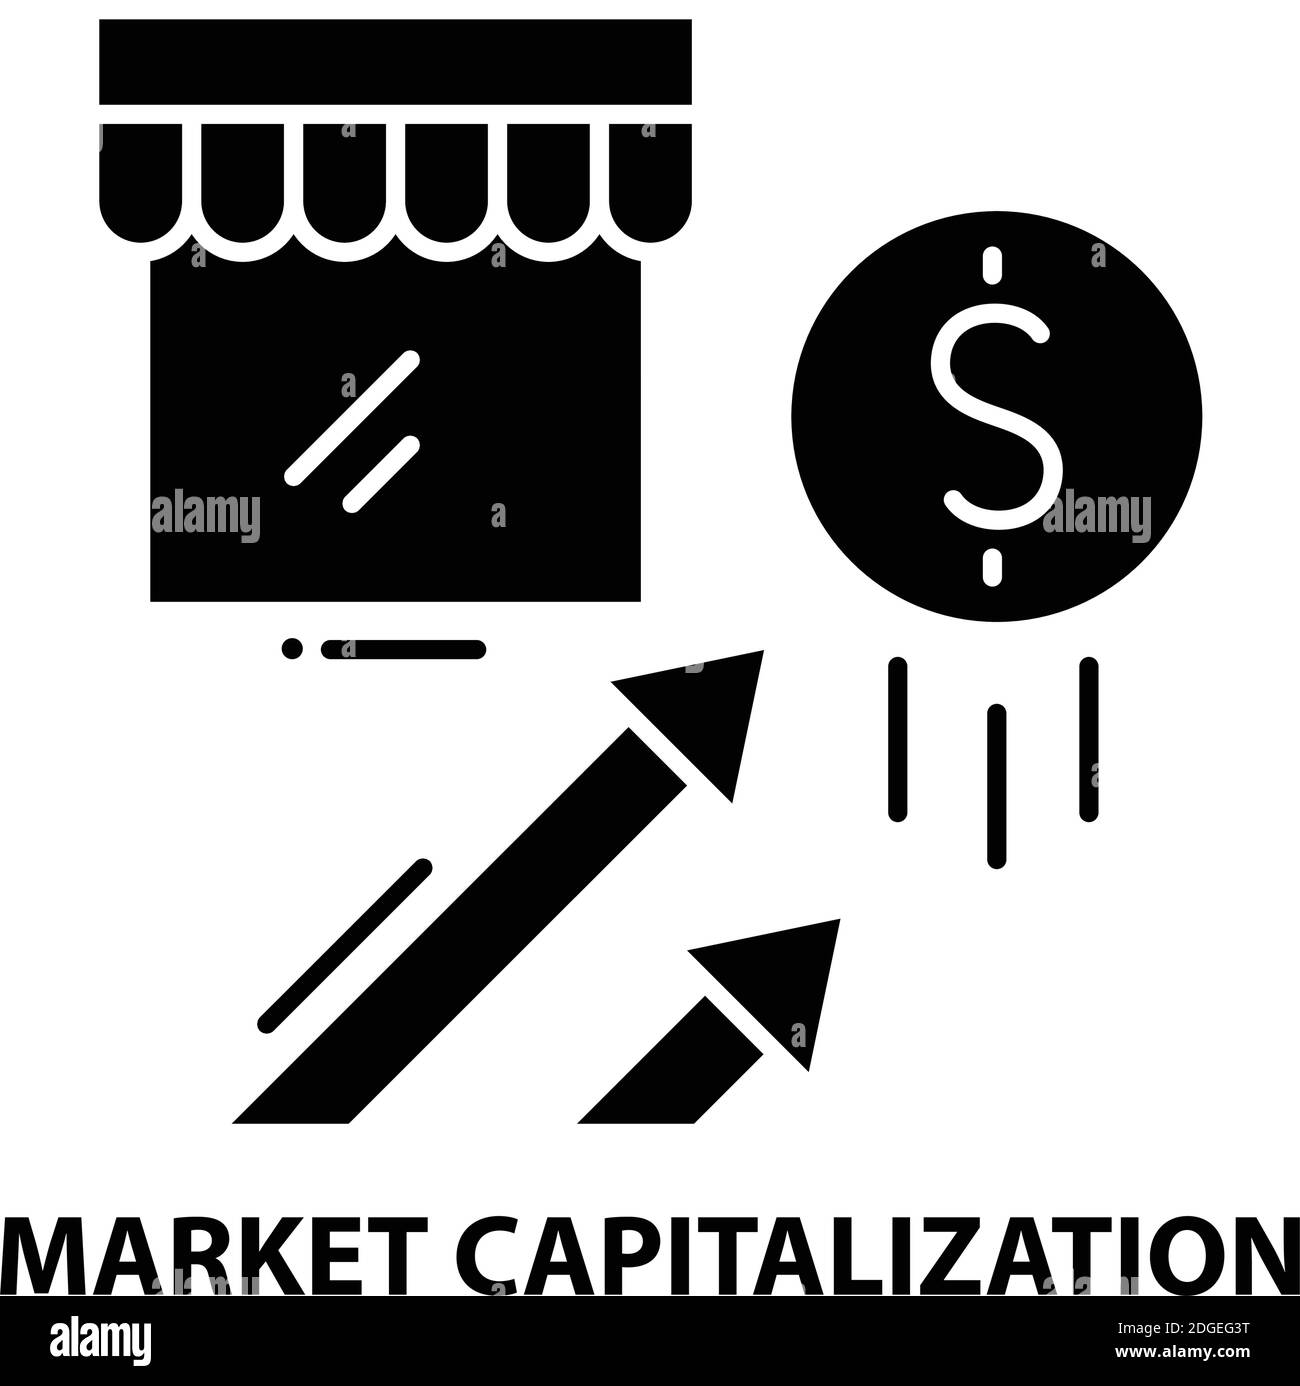 market capitalization symbol icon, black vector sign with editable strokes, concept illustration Stock Vector